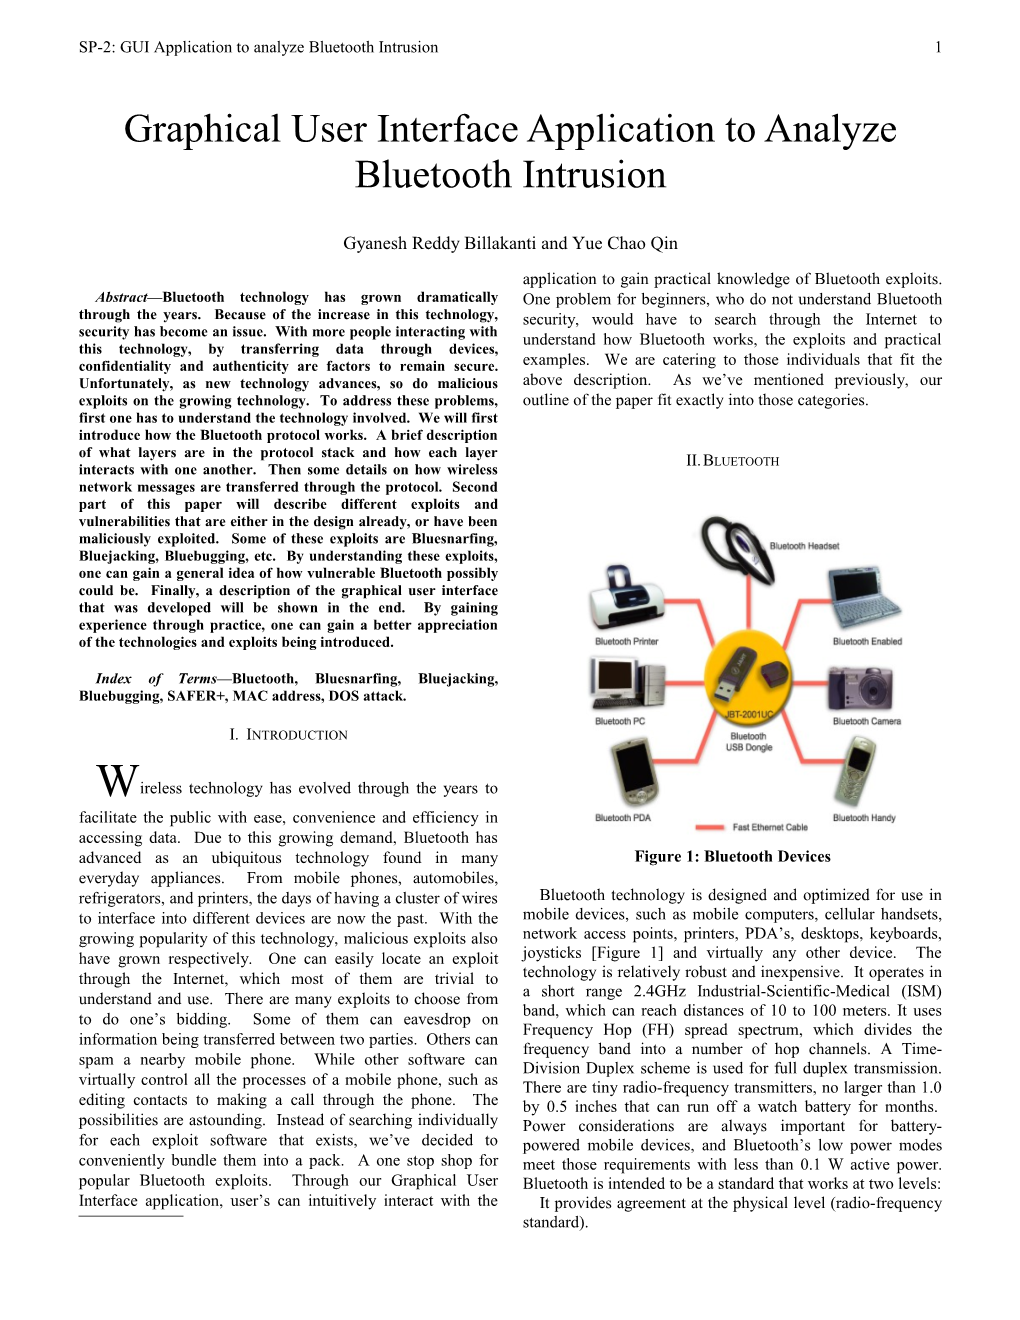 SP-2: GUI Application to Analyze Bluetooth Intrusion